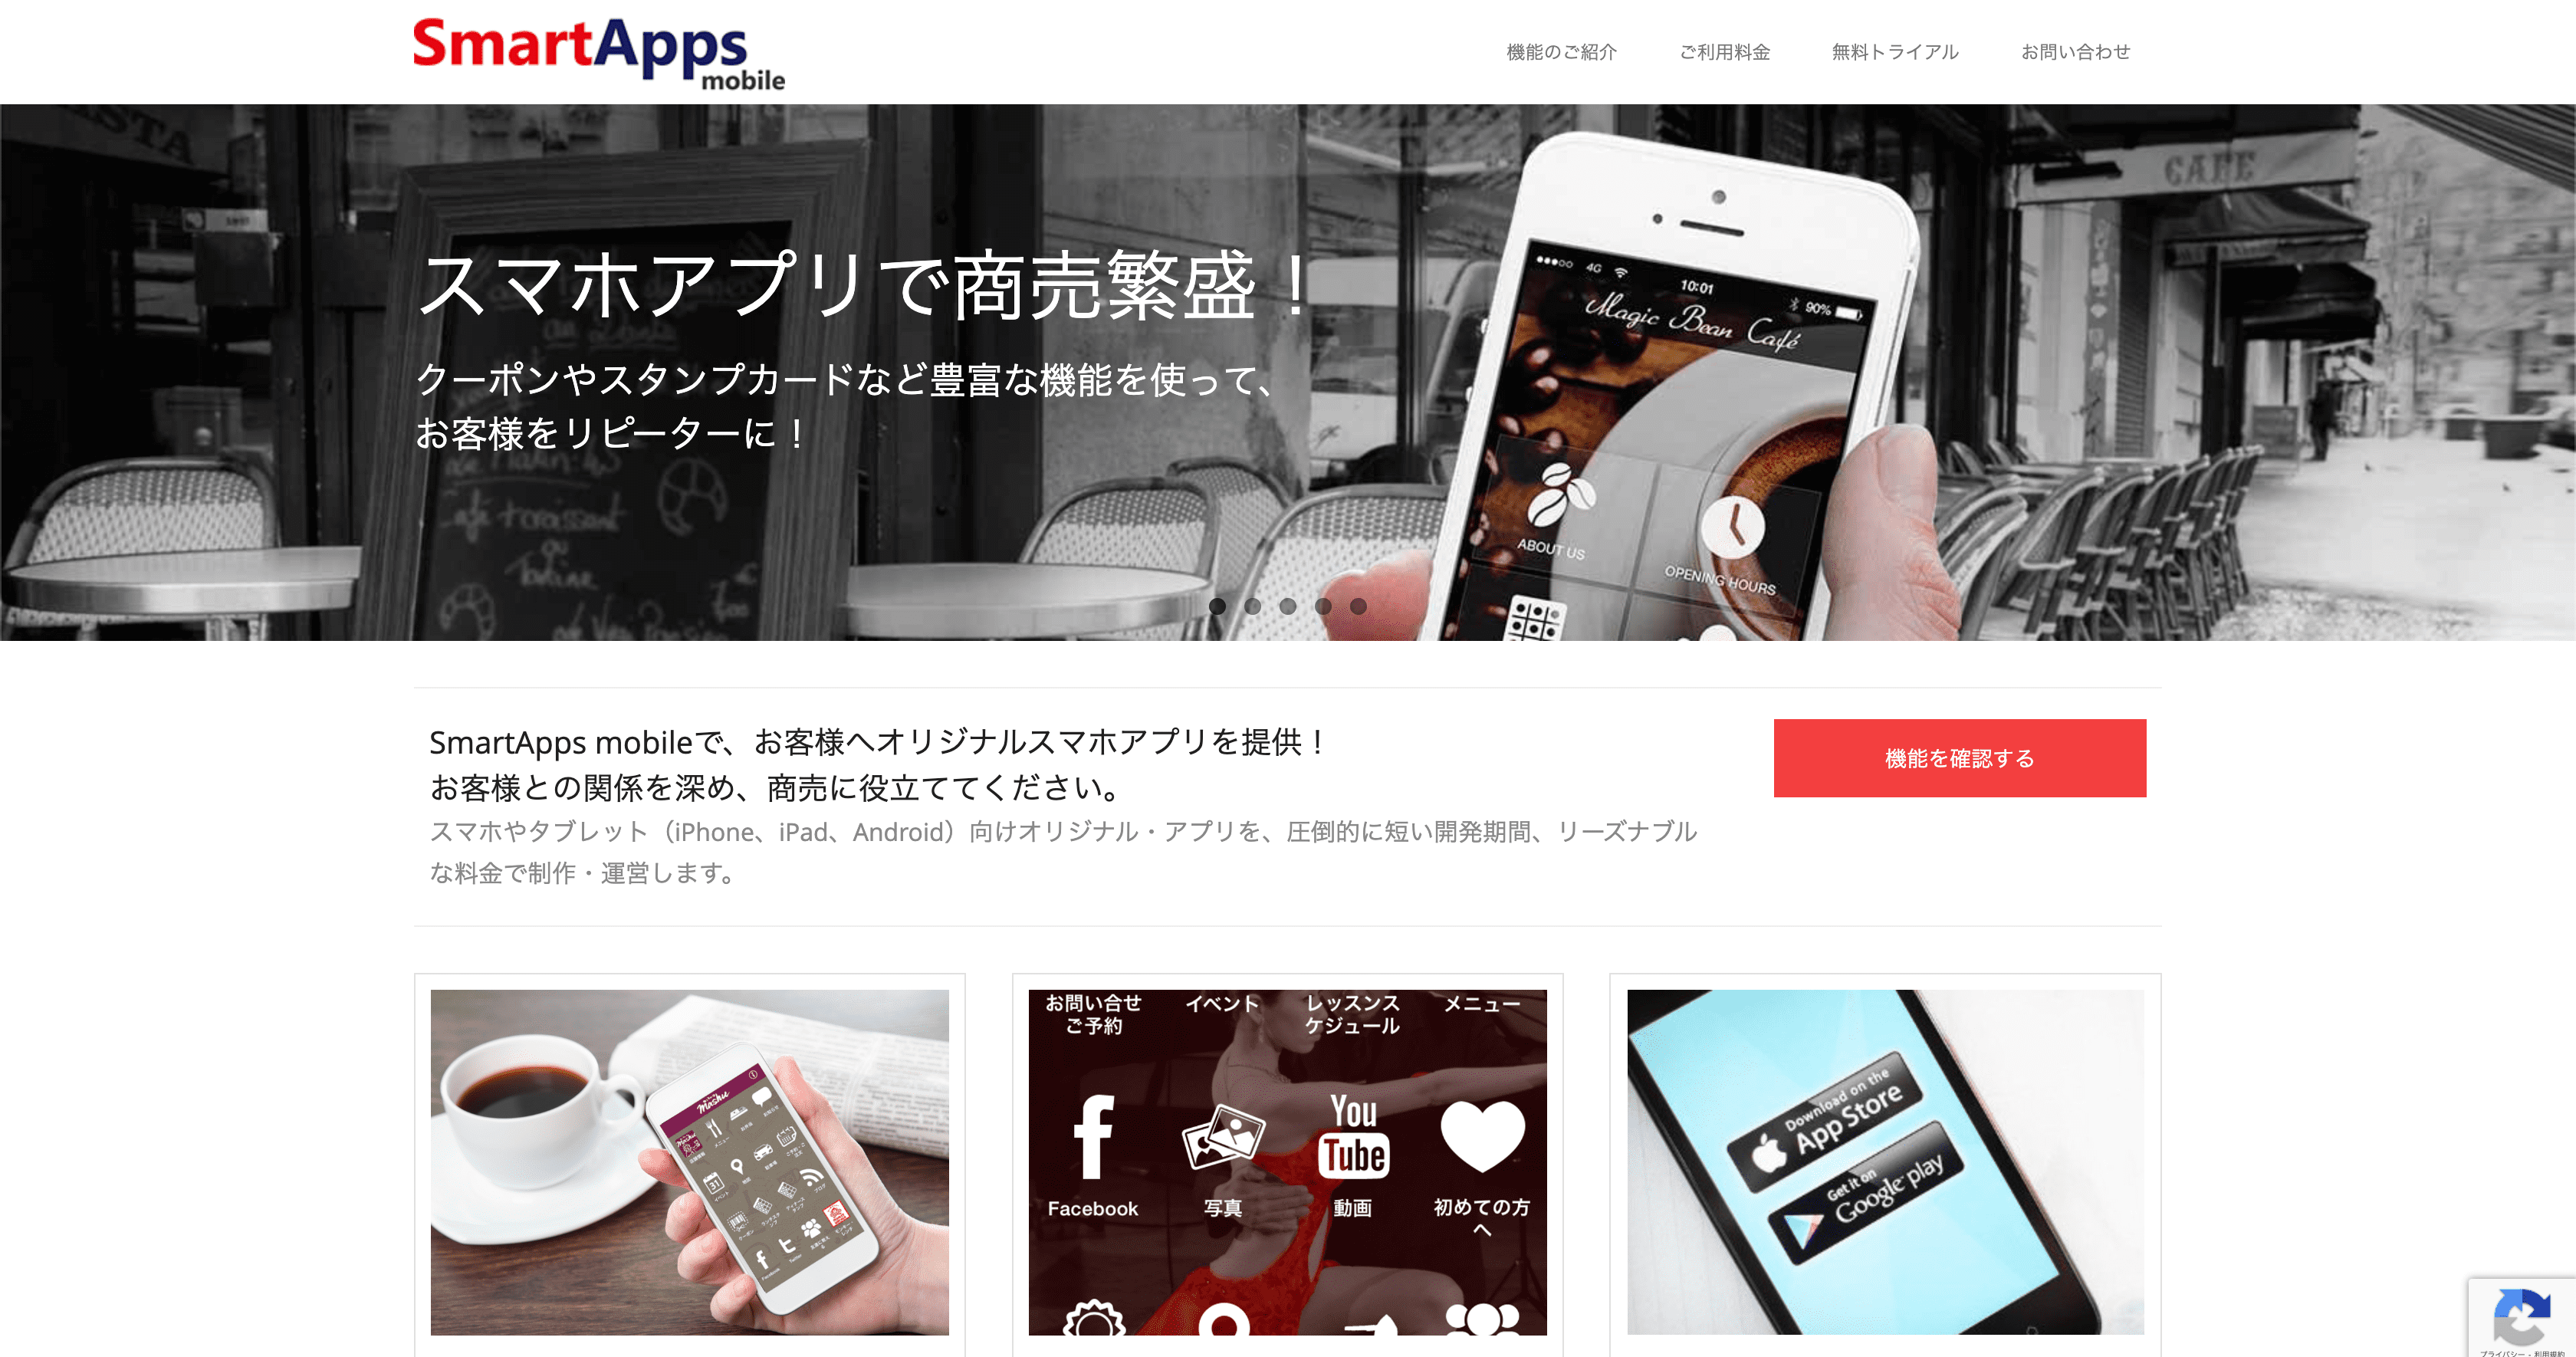 SmartApps mobile